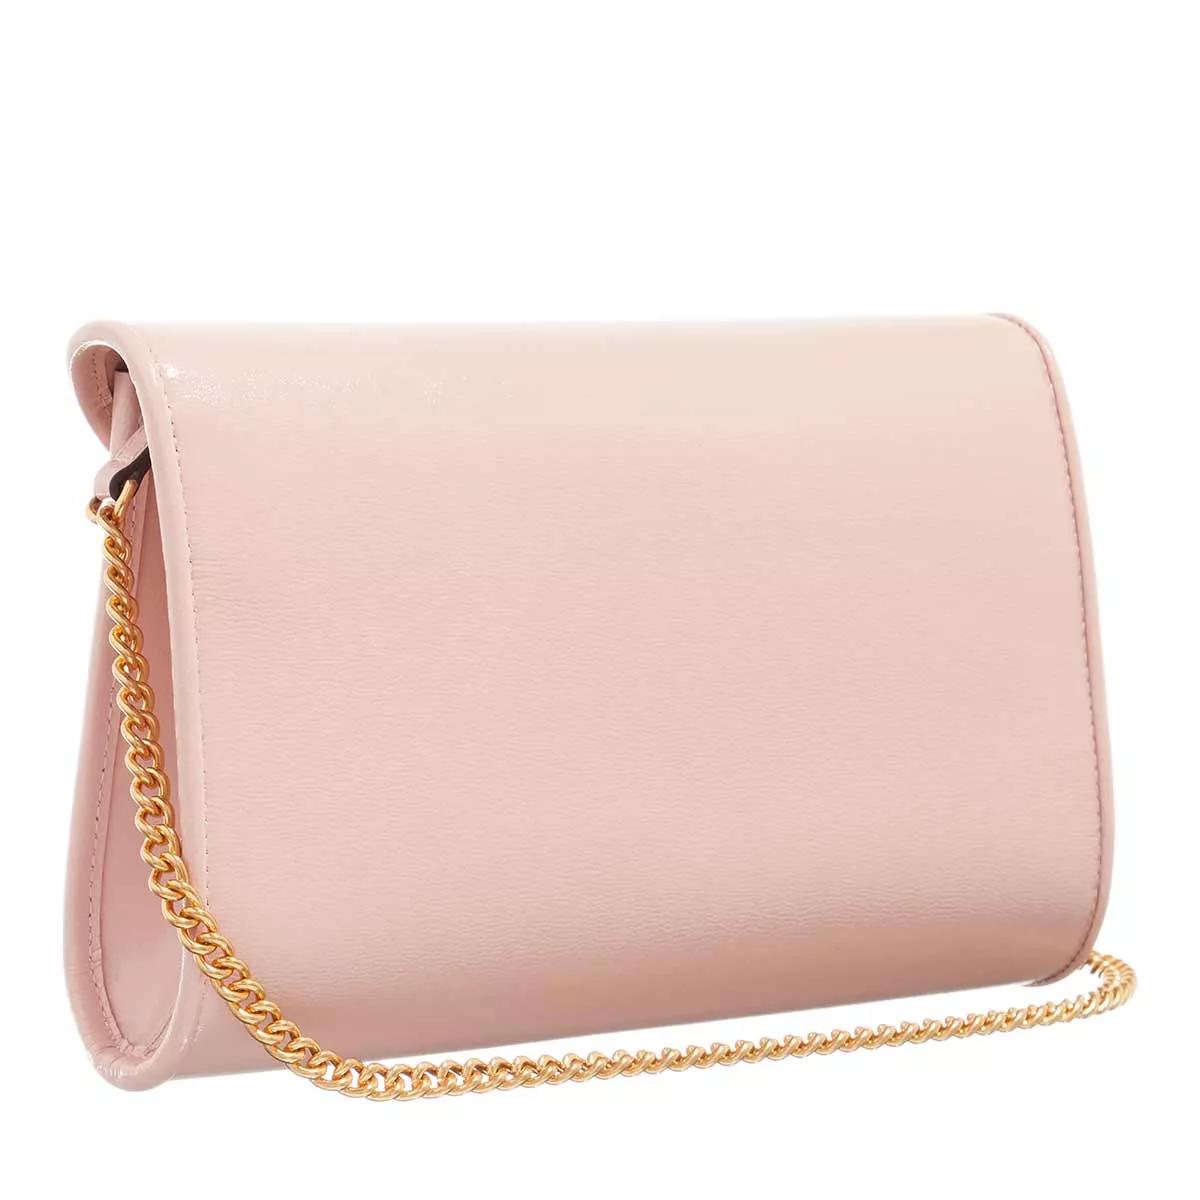 Kate Spade New York Petits sacs à main, Anna Shiny Textured Leather Medium Envelope Clutch en pink - Clutchespour dames